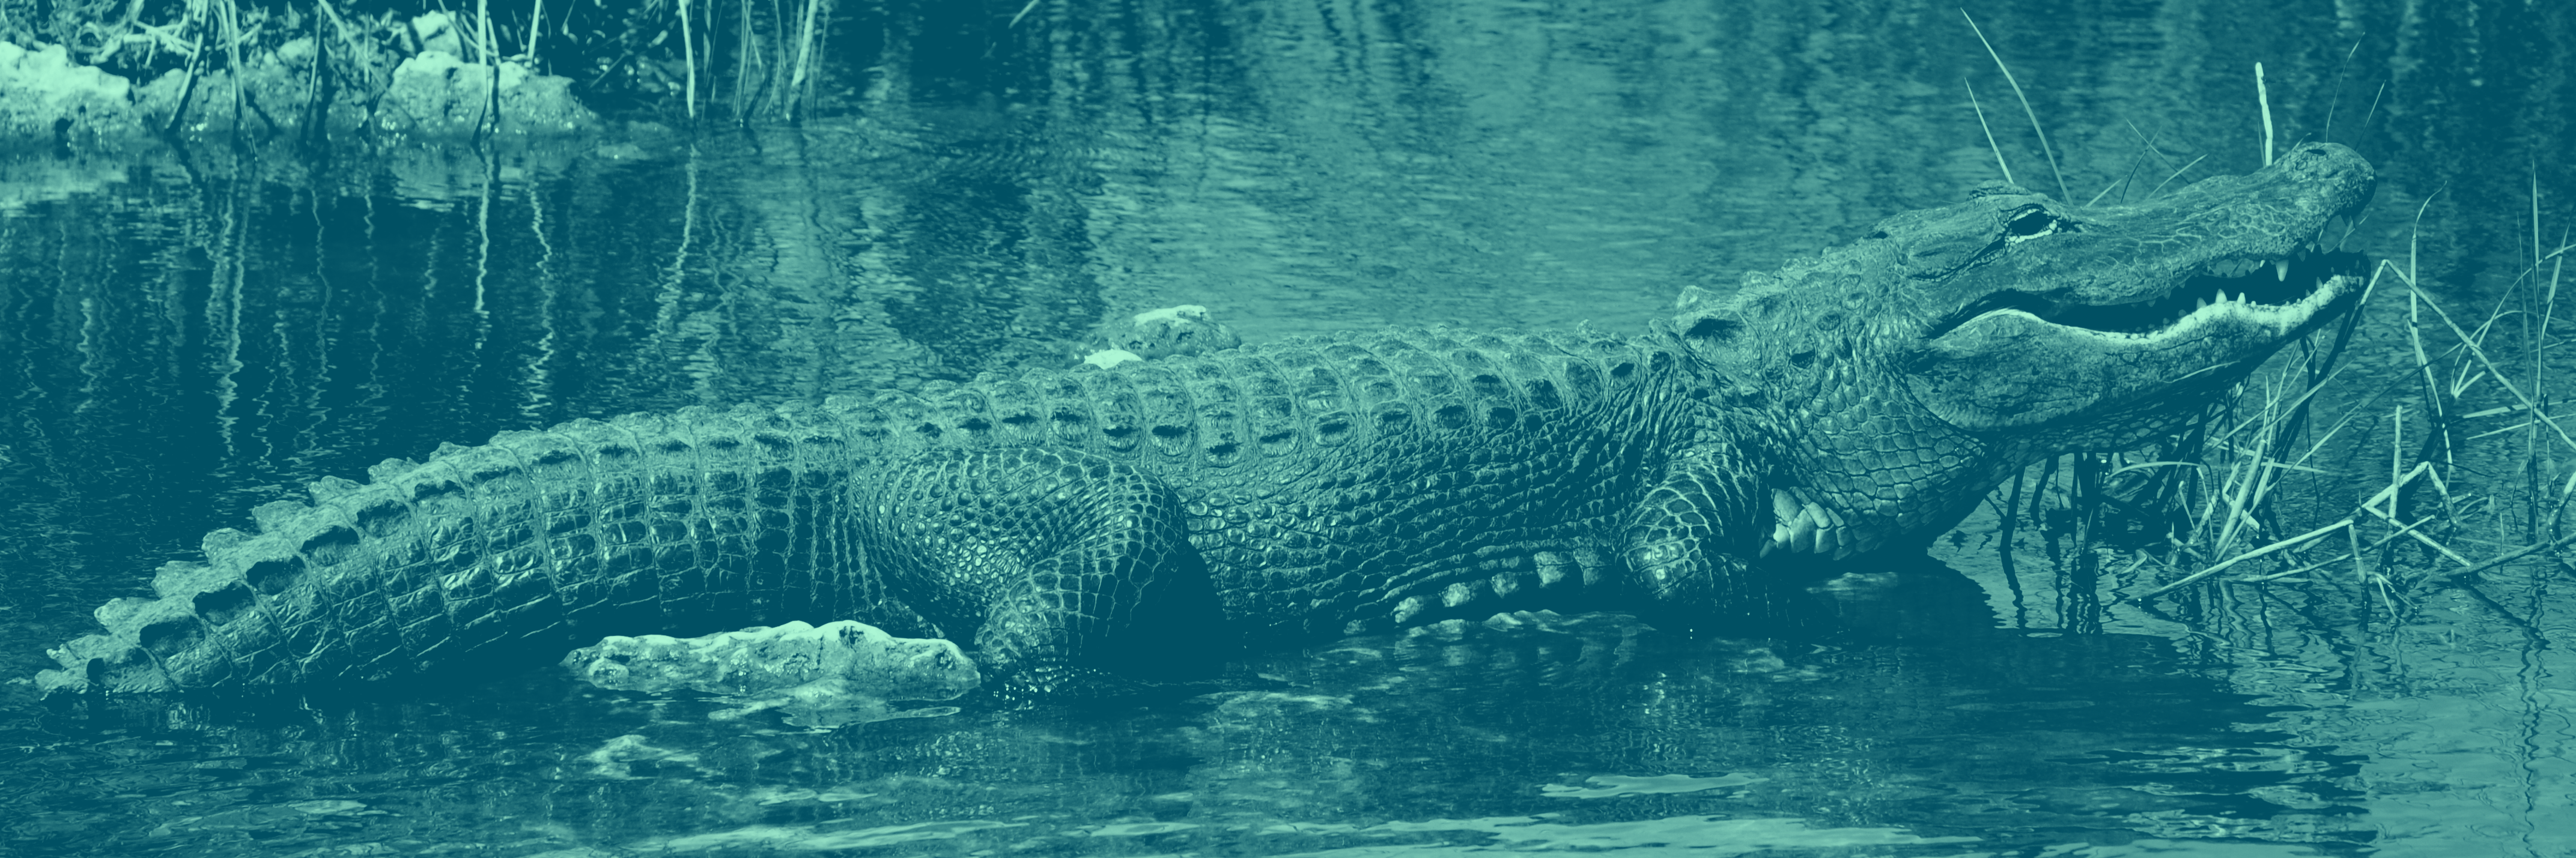 Alligators Overhead by C. Lee McKenzie